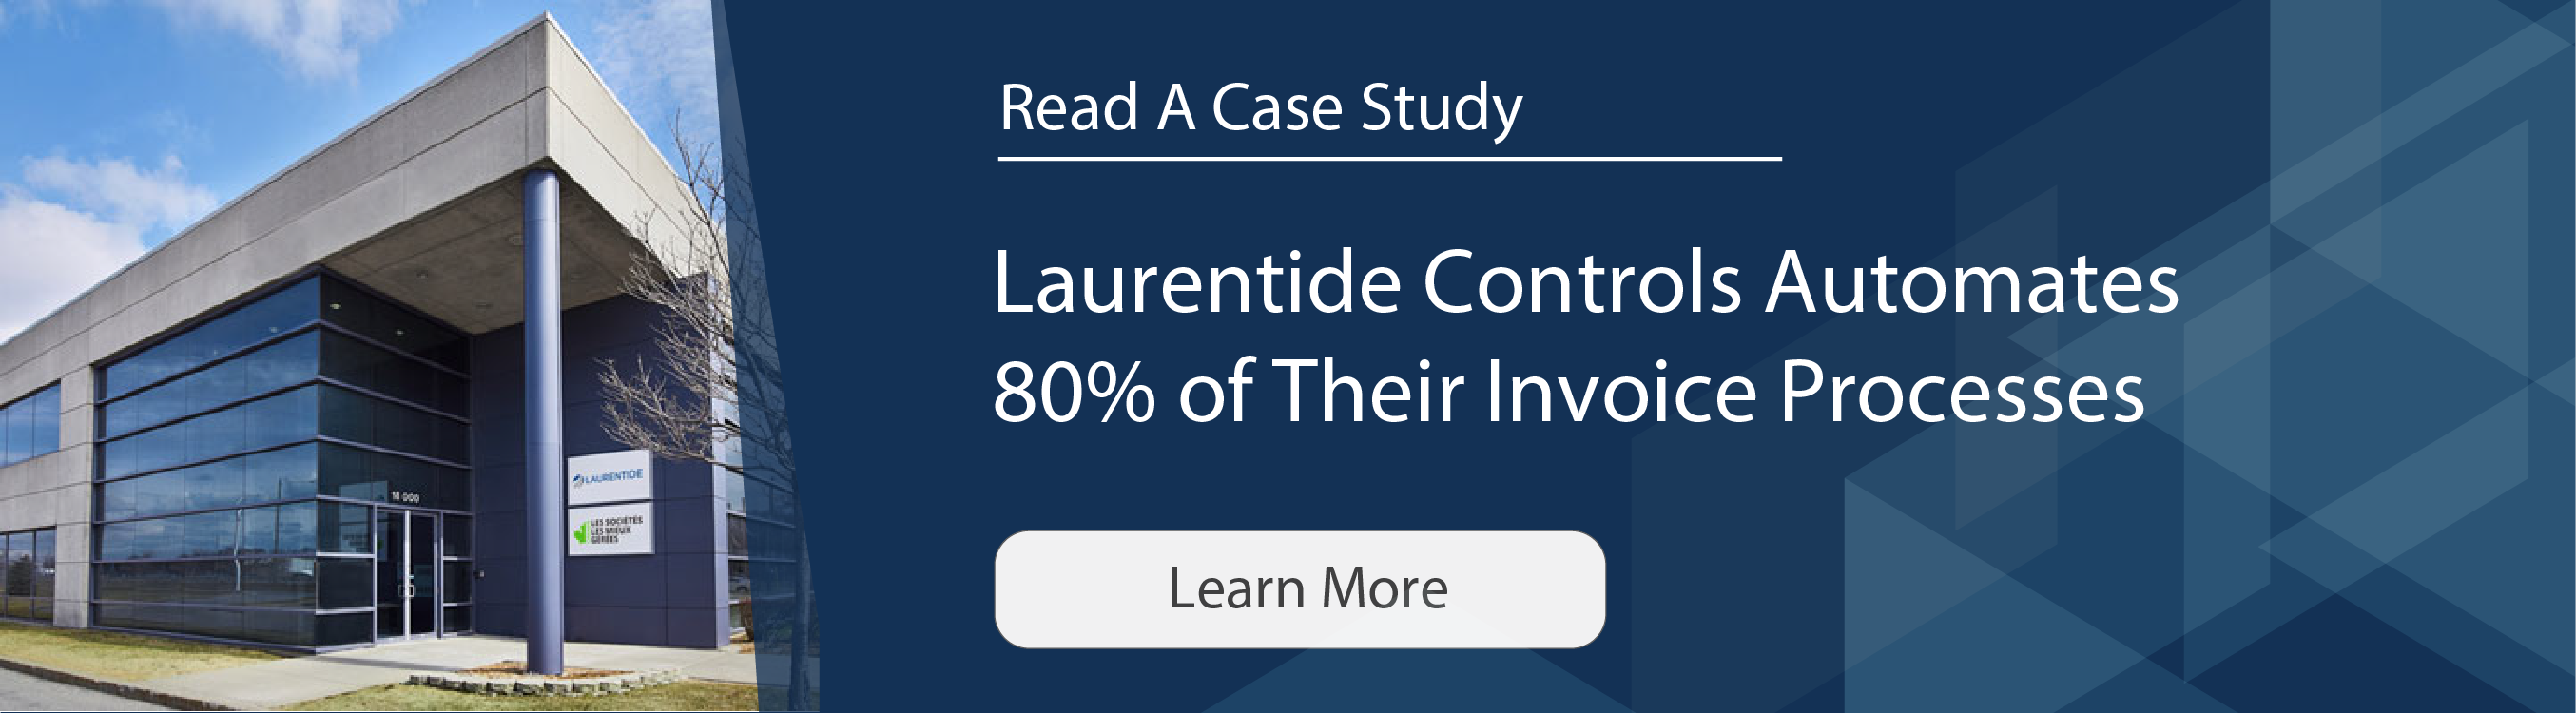 laurentide-case-study